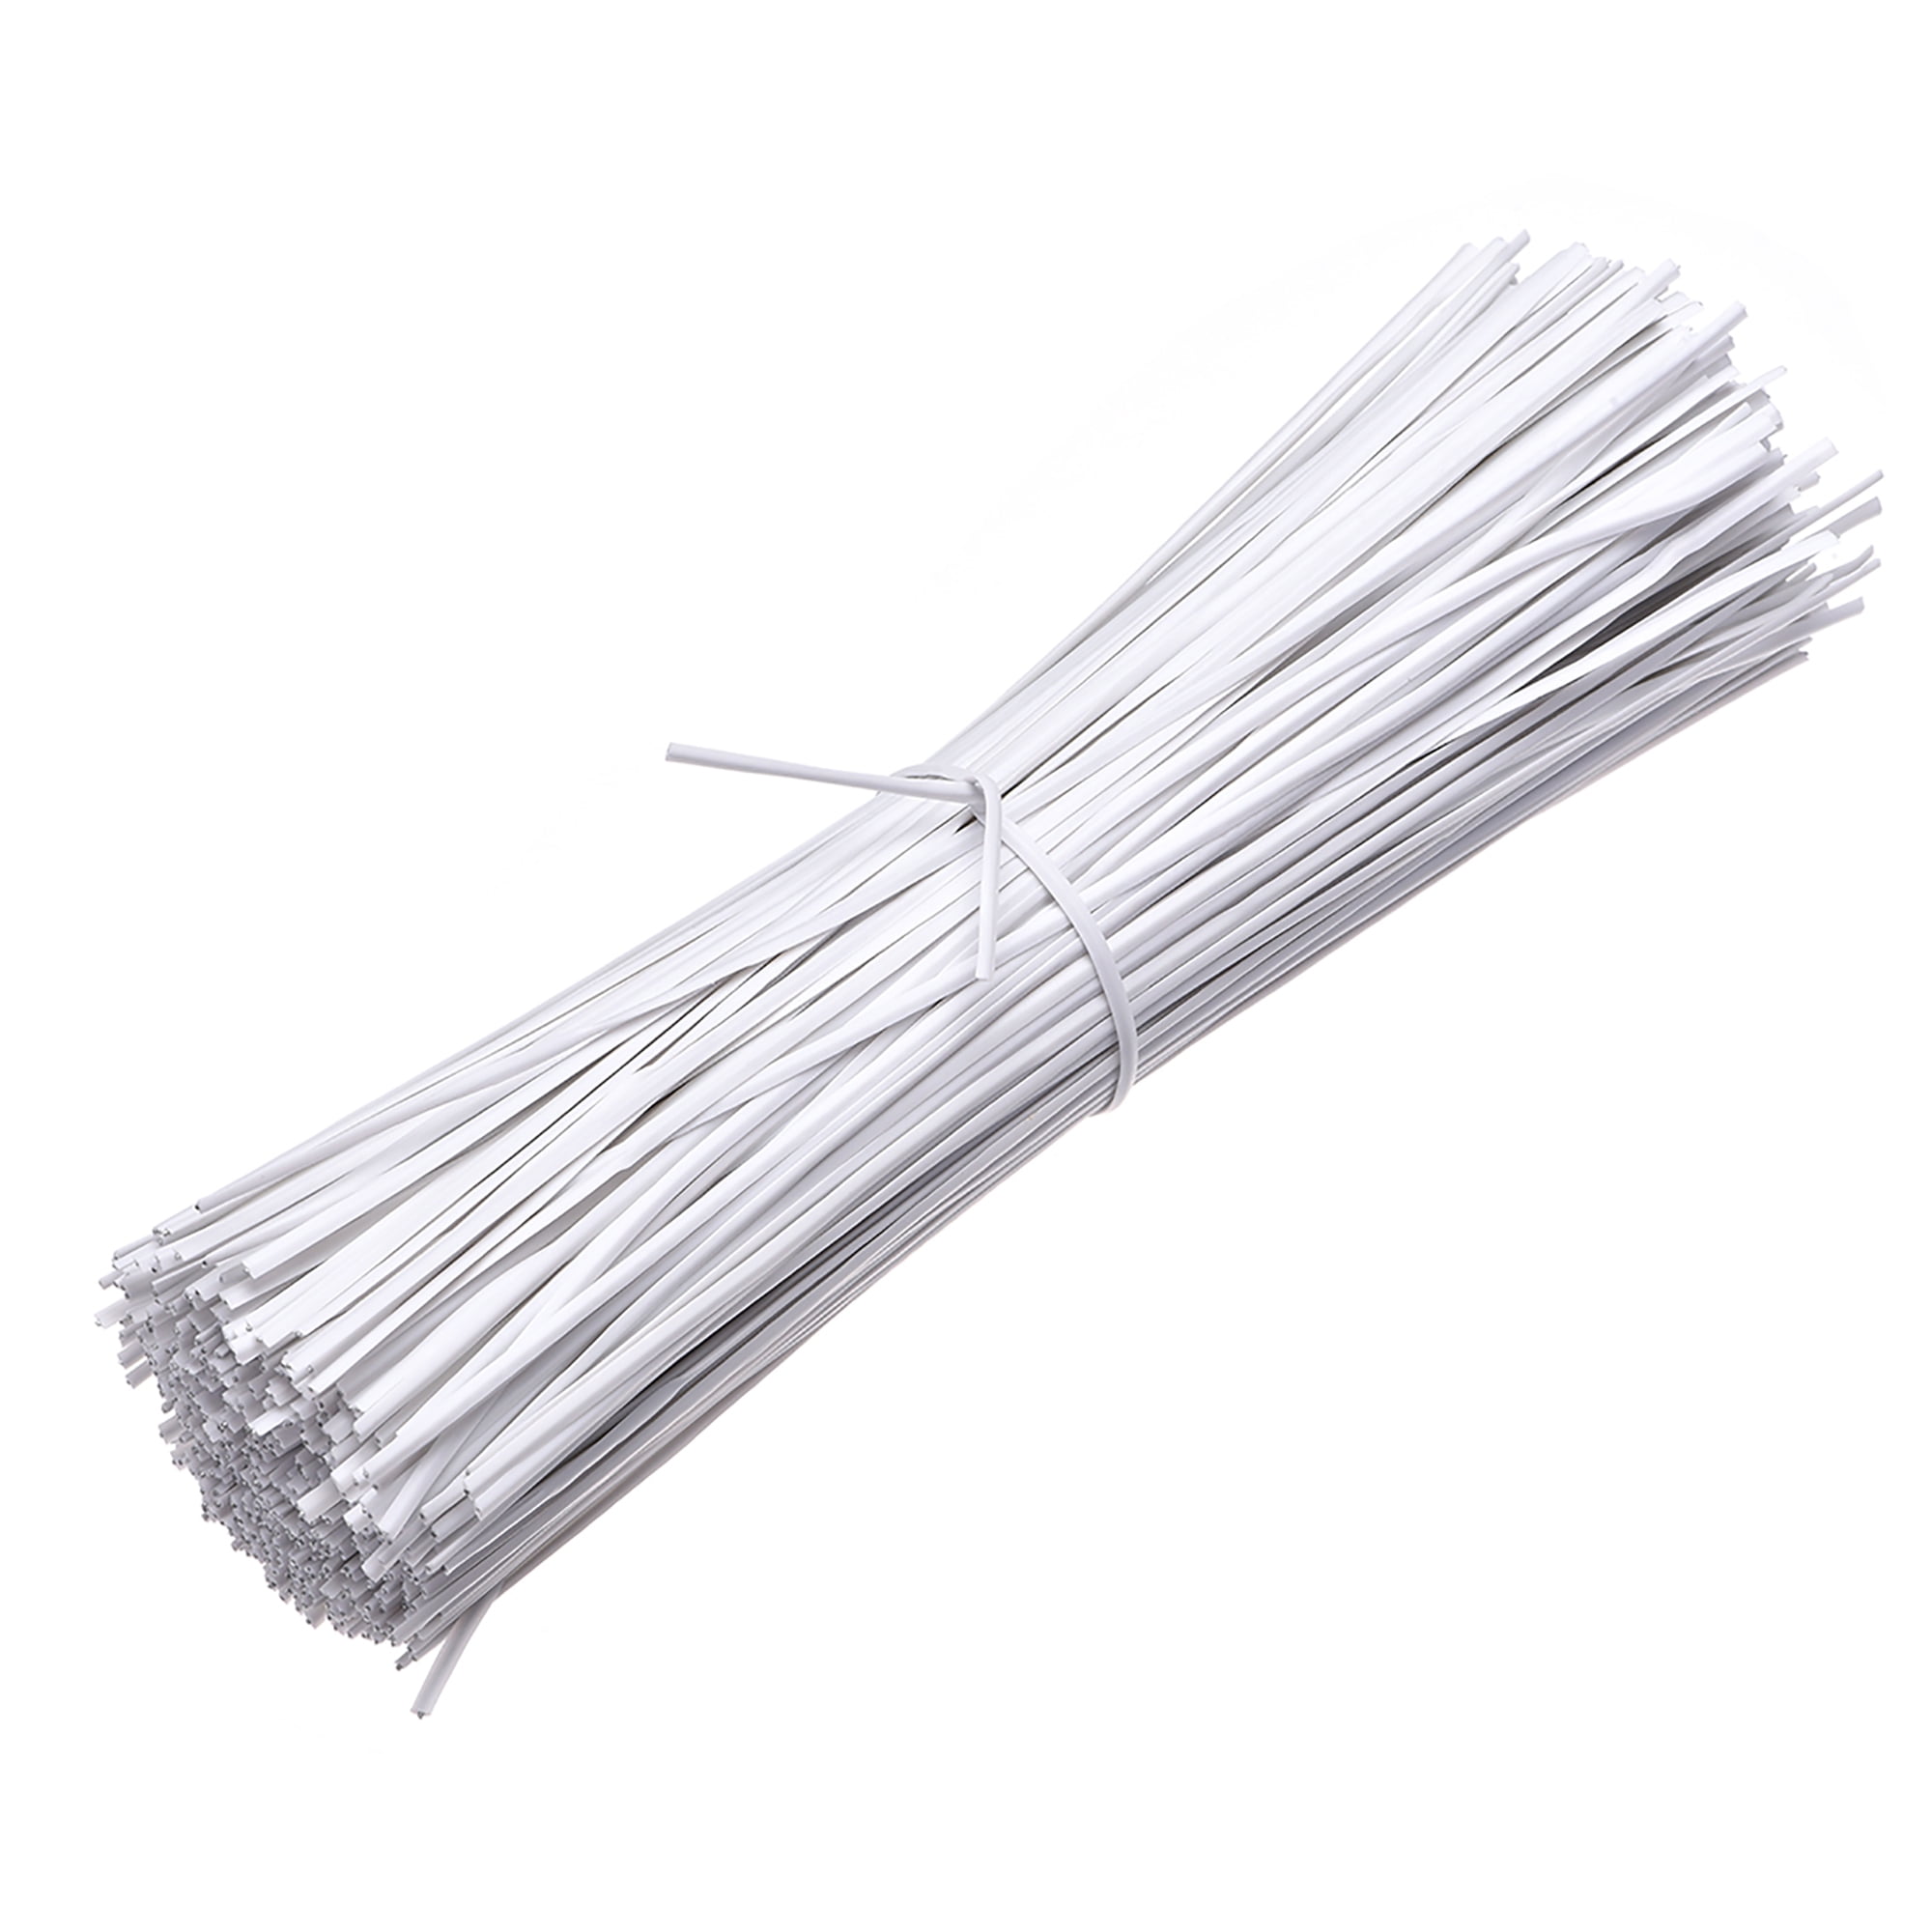 Wire, Westrim®, plastic-coated steel, clear, 4mm wide twist tie